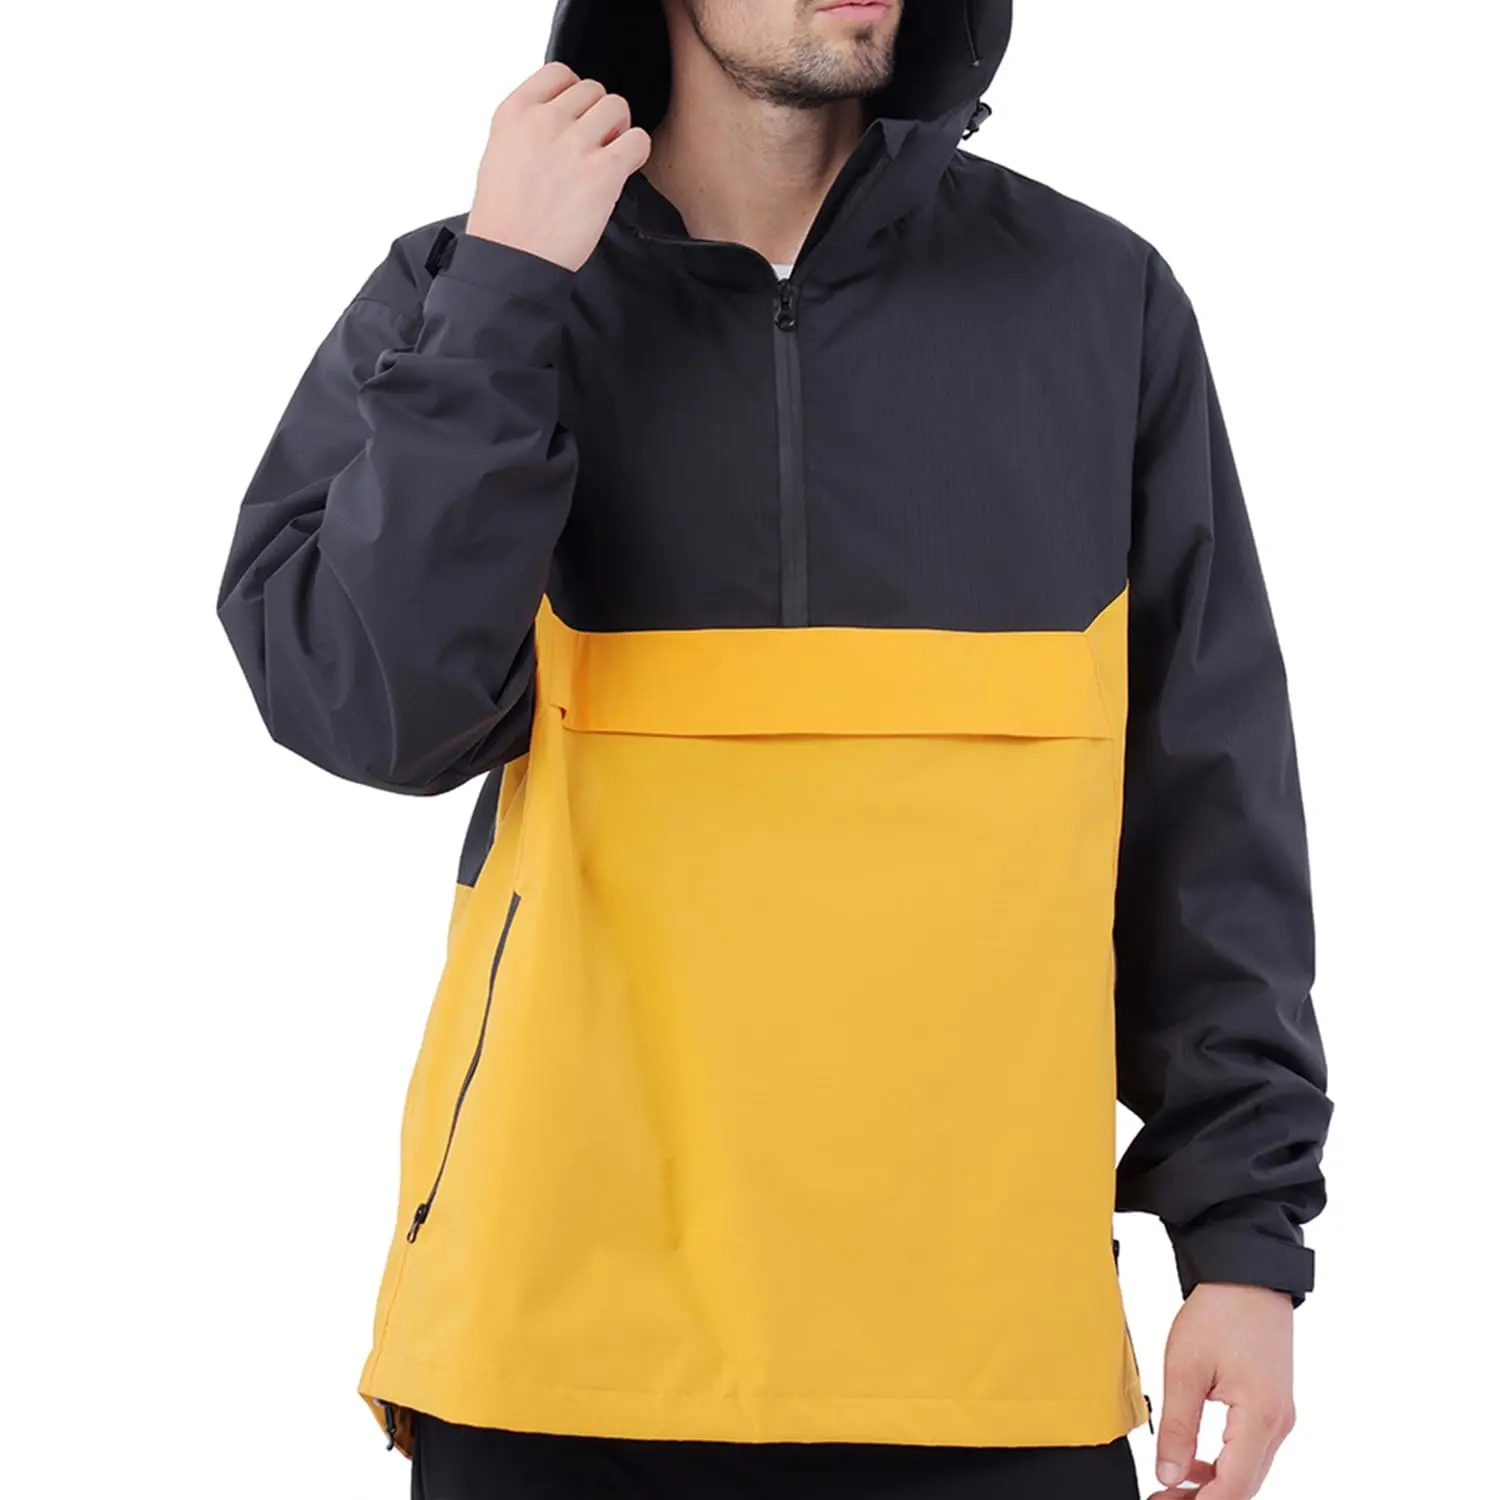 High Quality Polyester Men's Sportswear Jacket Lightweight Waterproof Raincoat for Outdoor Activities Men's hooded trench coat